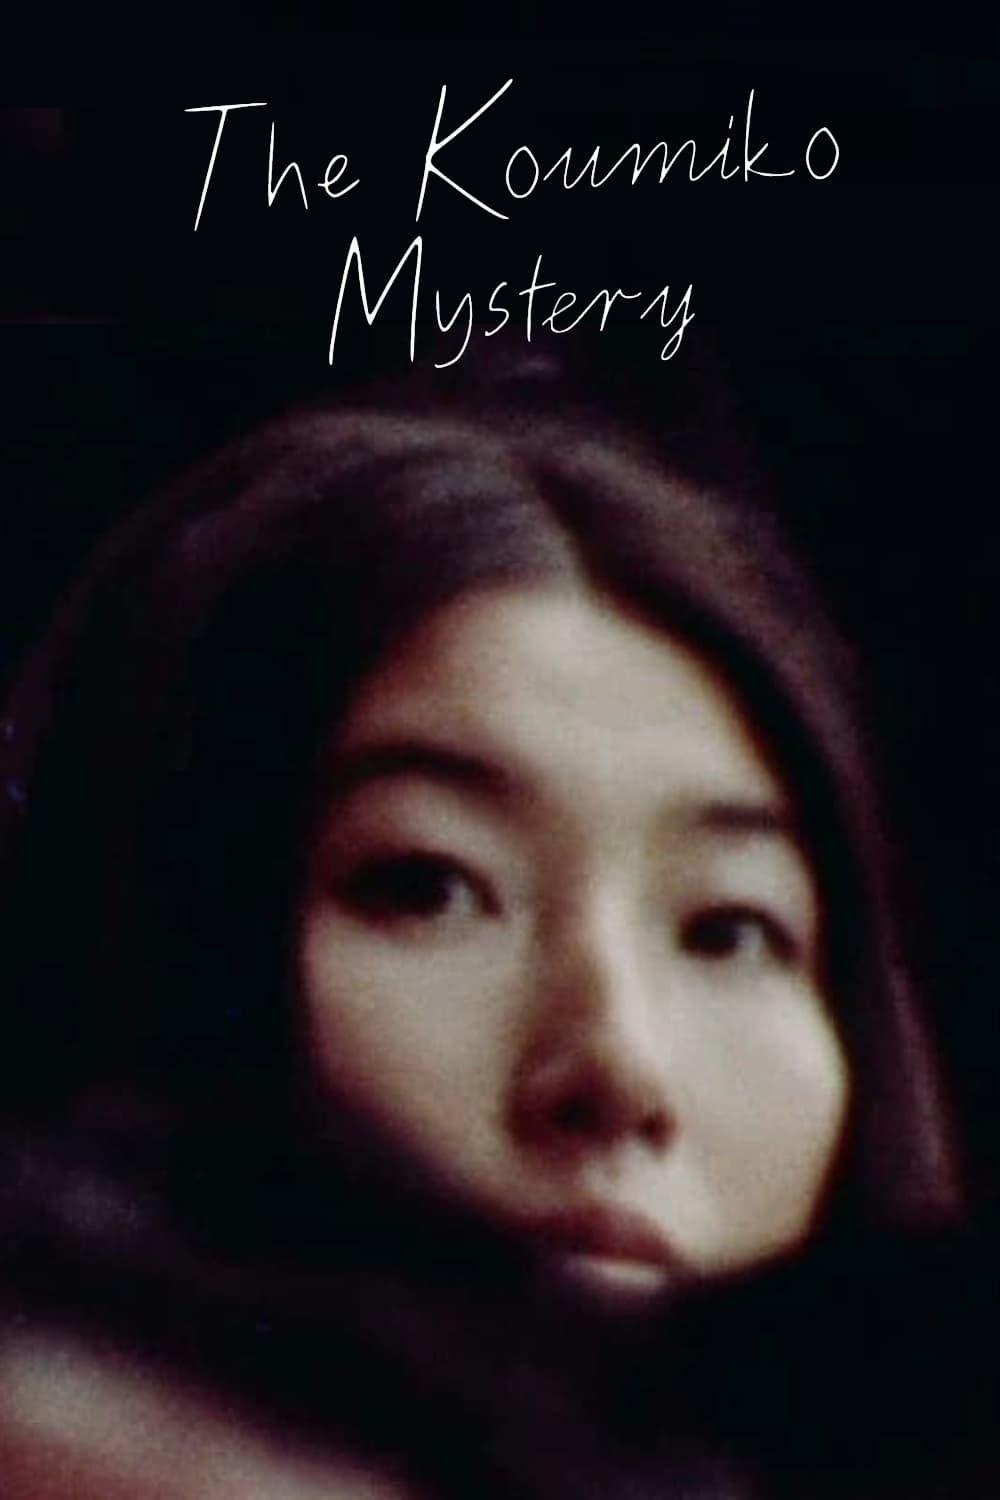 The Koumiko Mystery poster